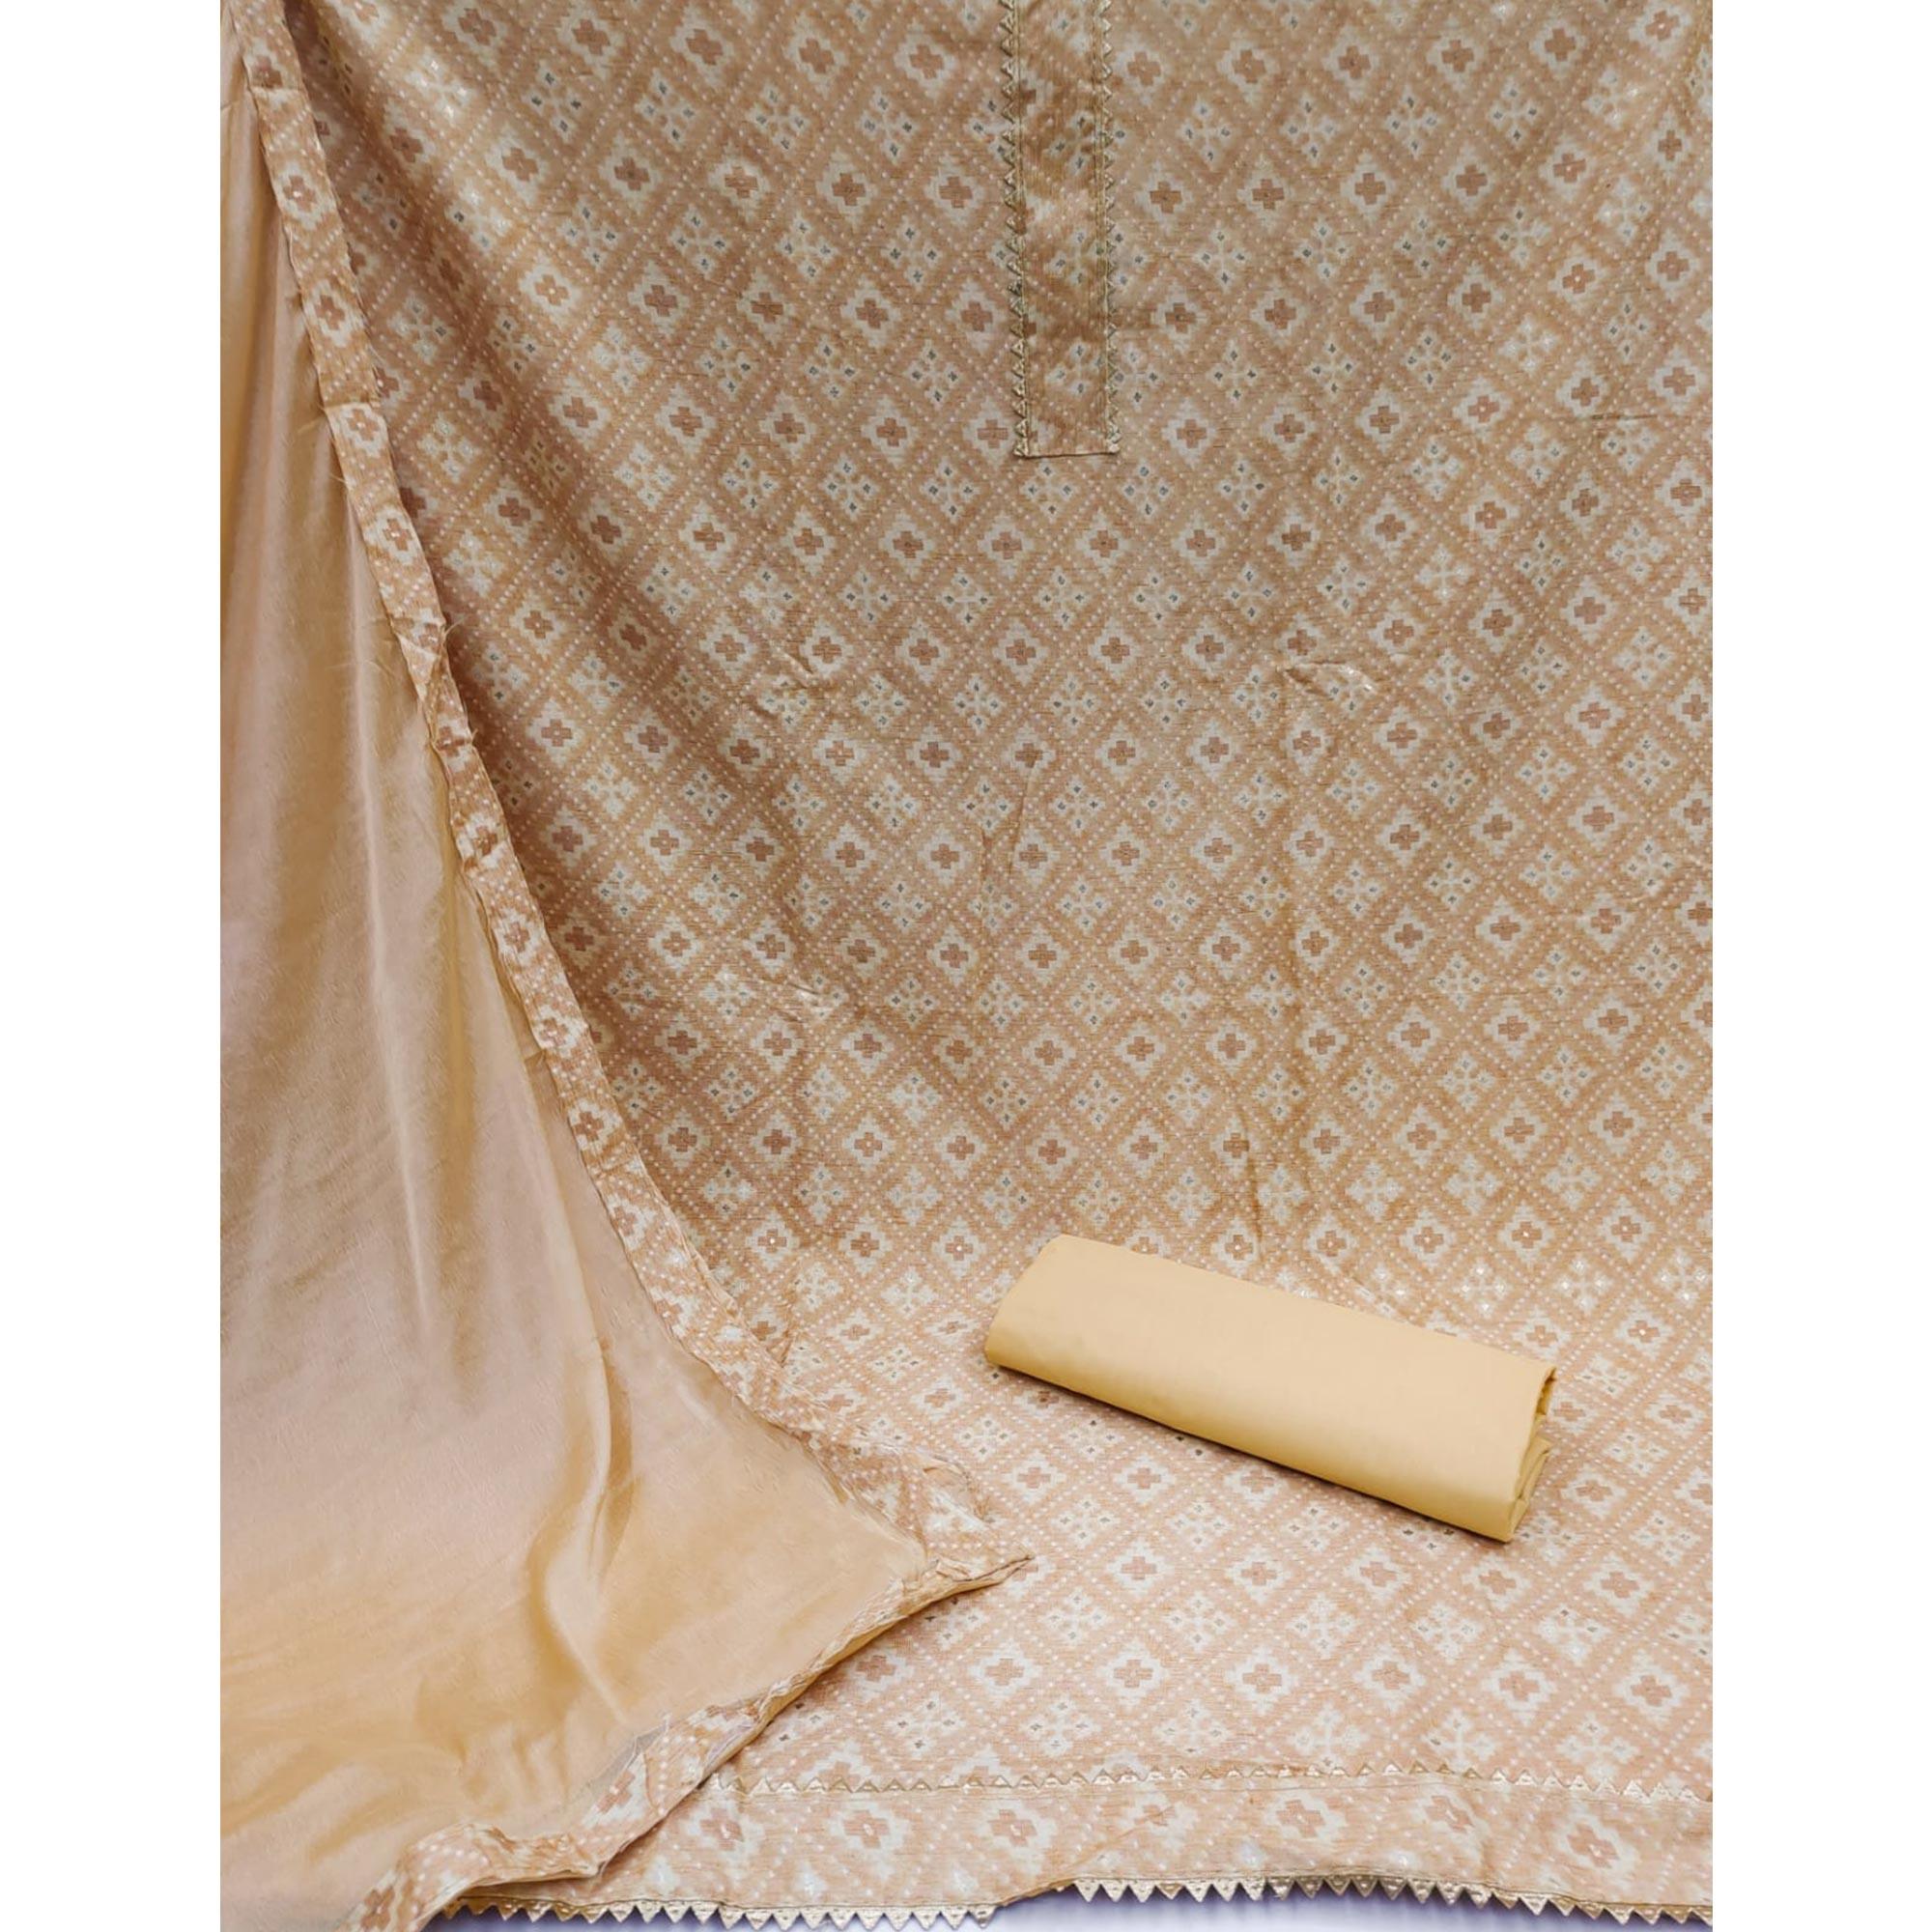 Chikoo Foil Printed Rayon Dress Material - Peachmode